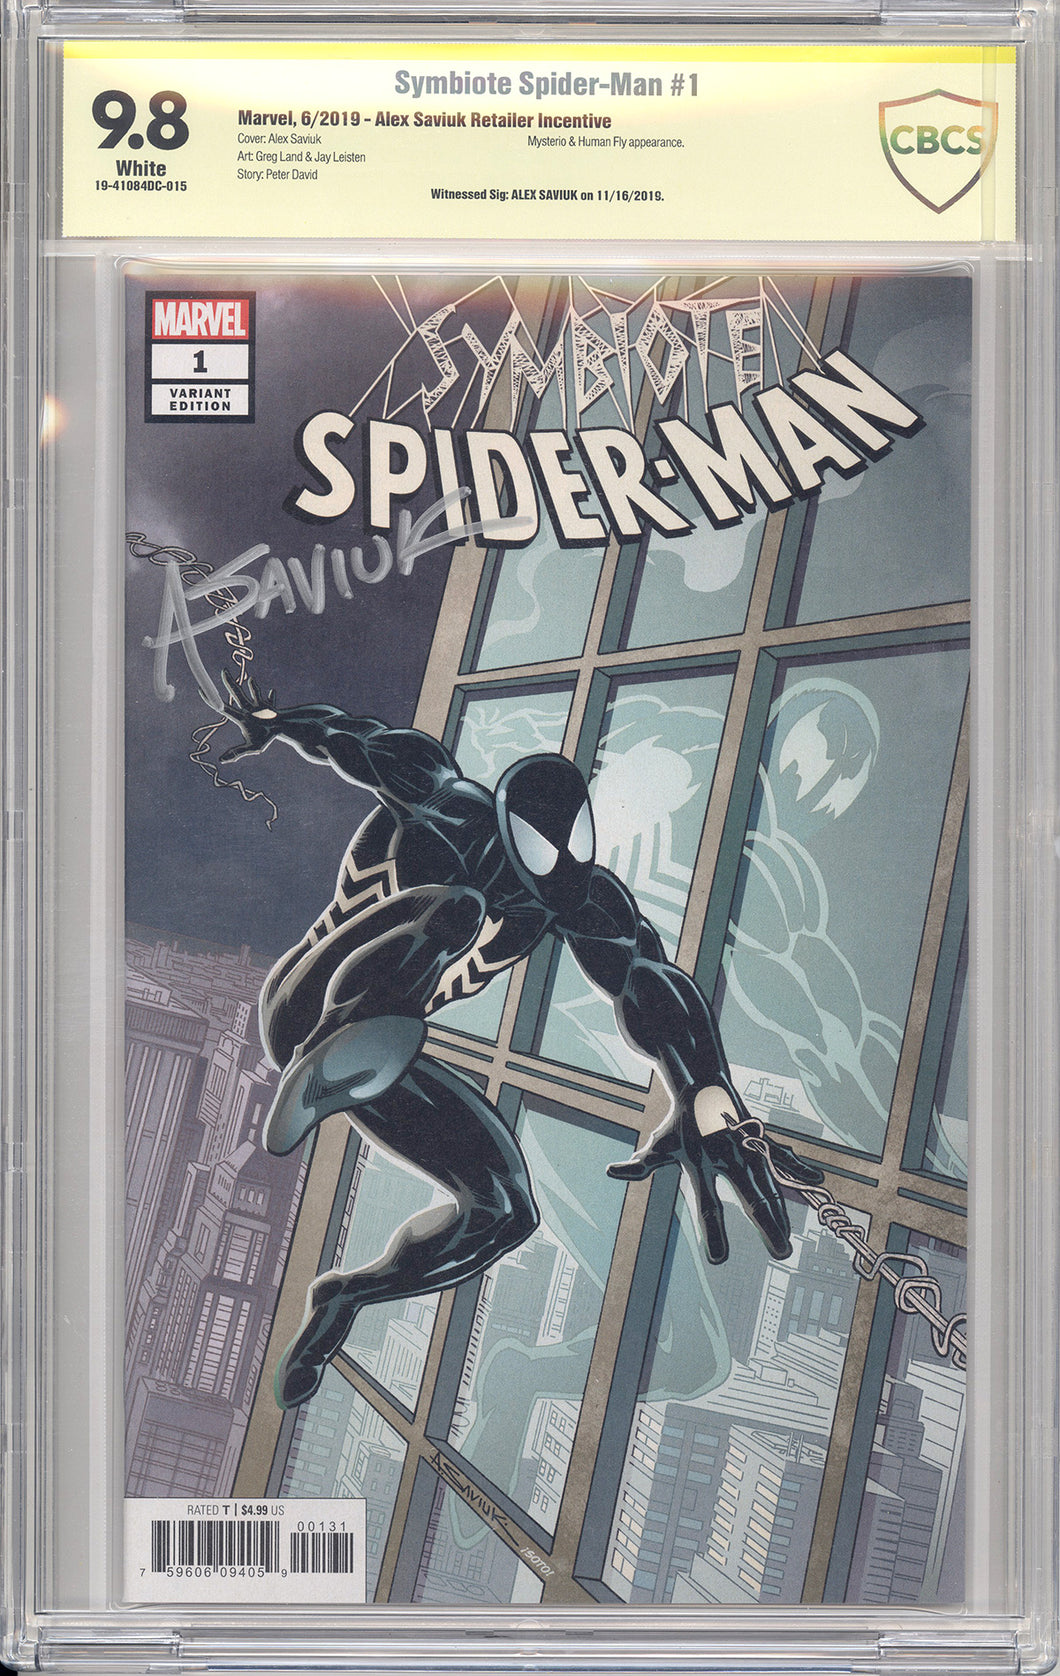 Symbiote Spider-Man #1 - 1:25 Retailer Incentive - Signed by Alex Saviuk - CBCS 9.8